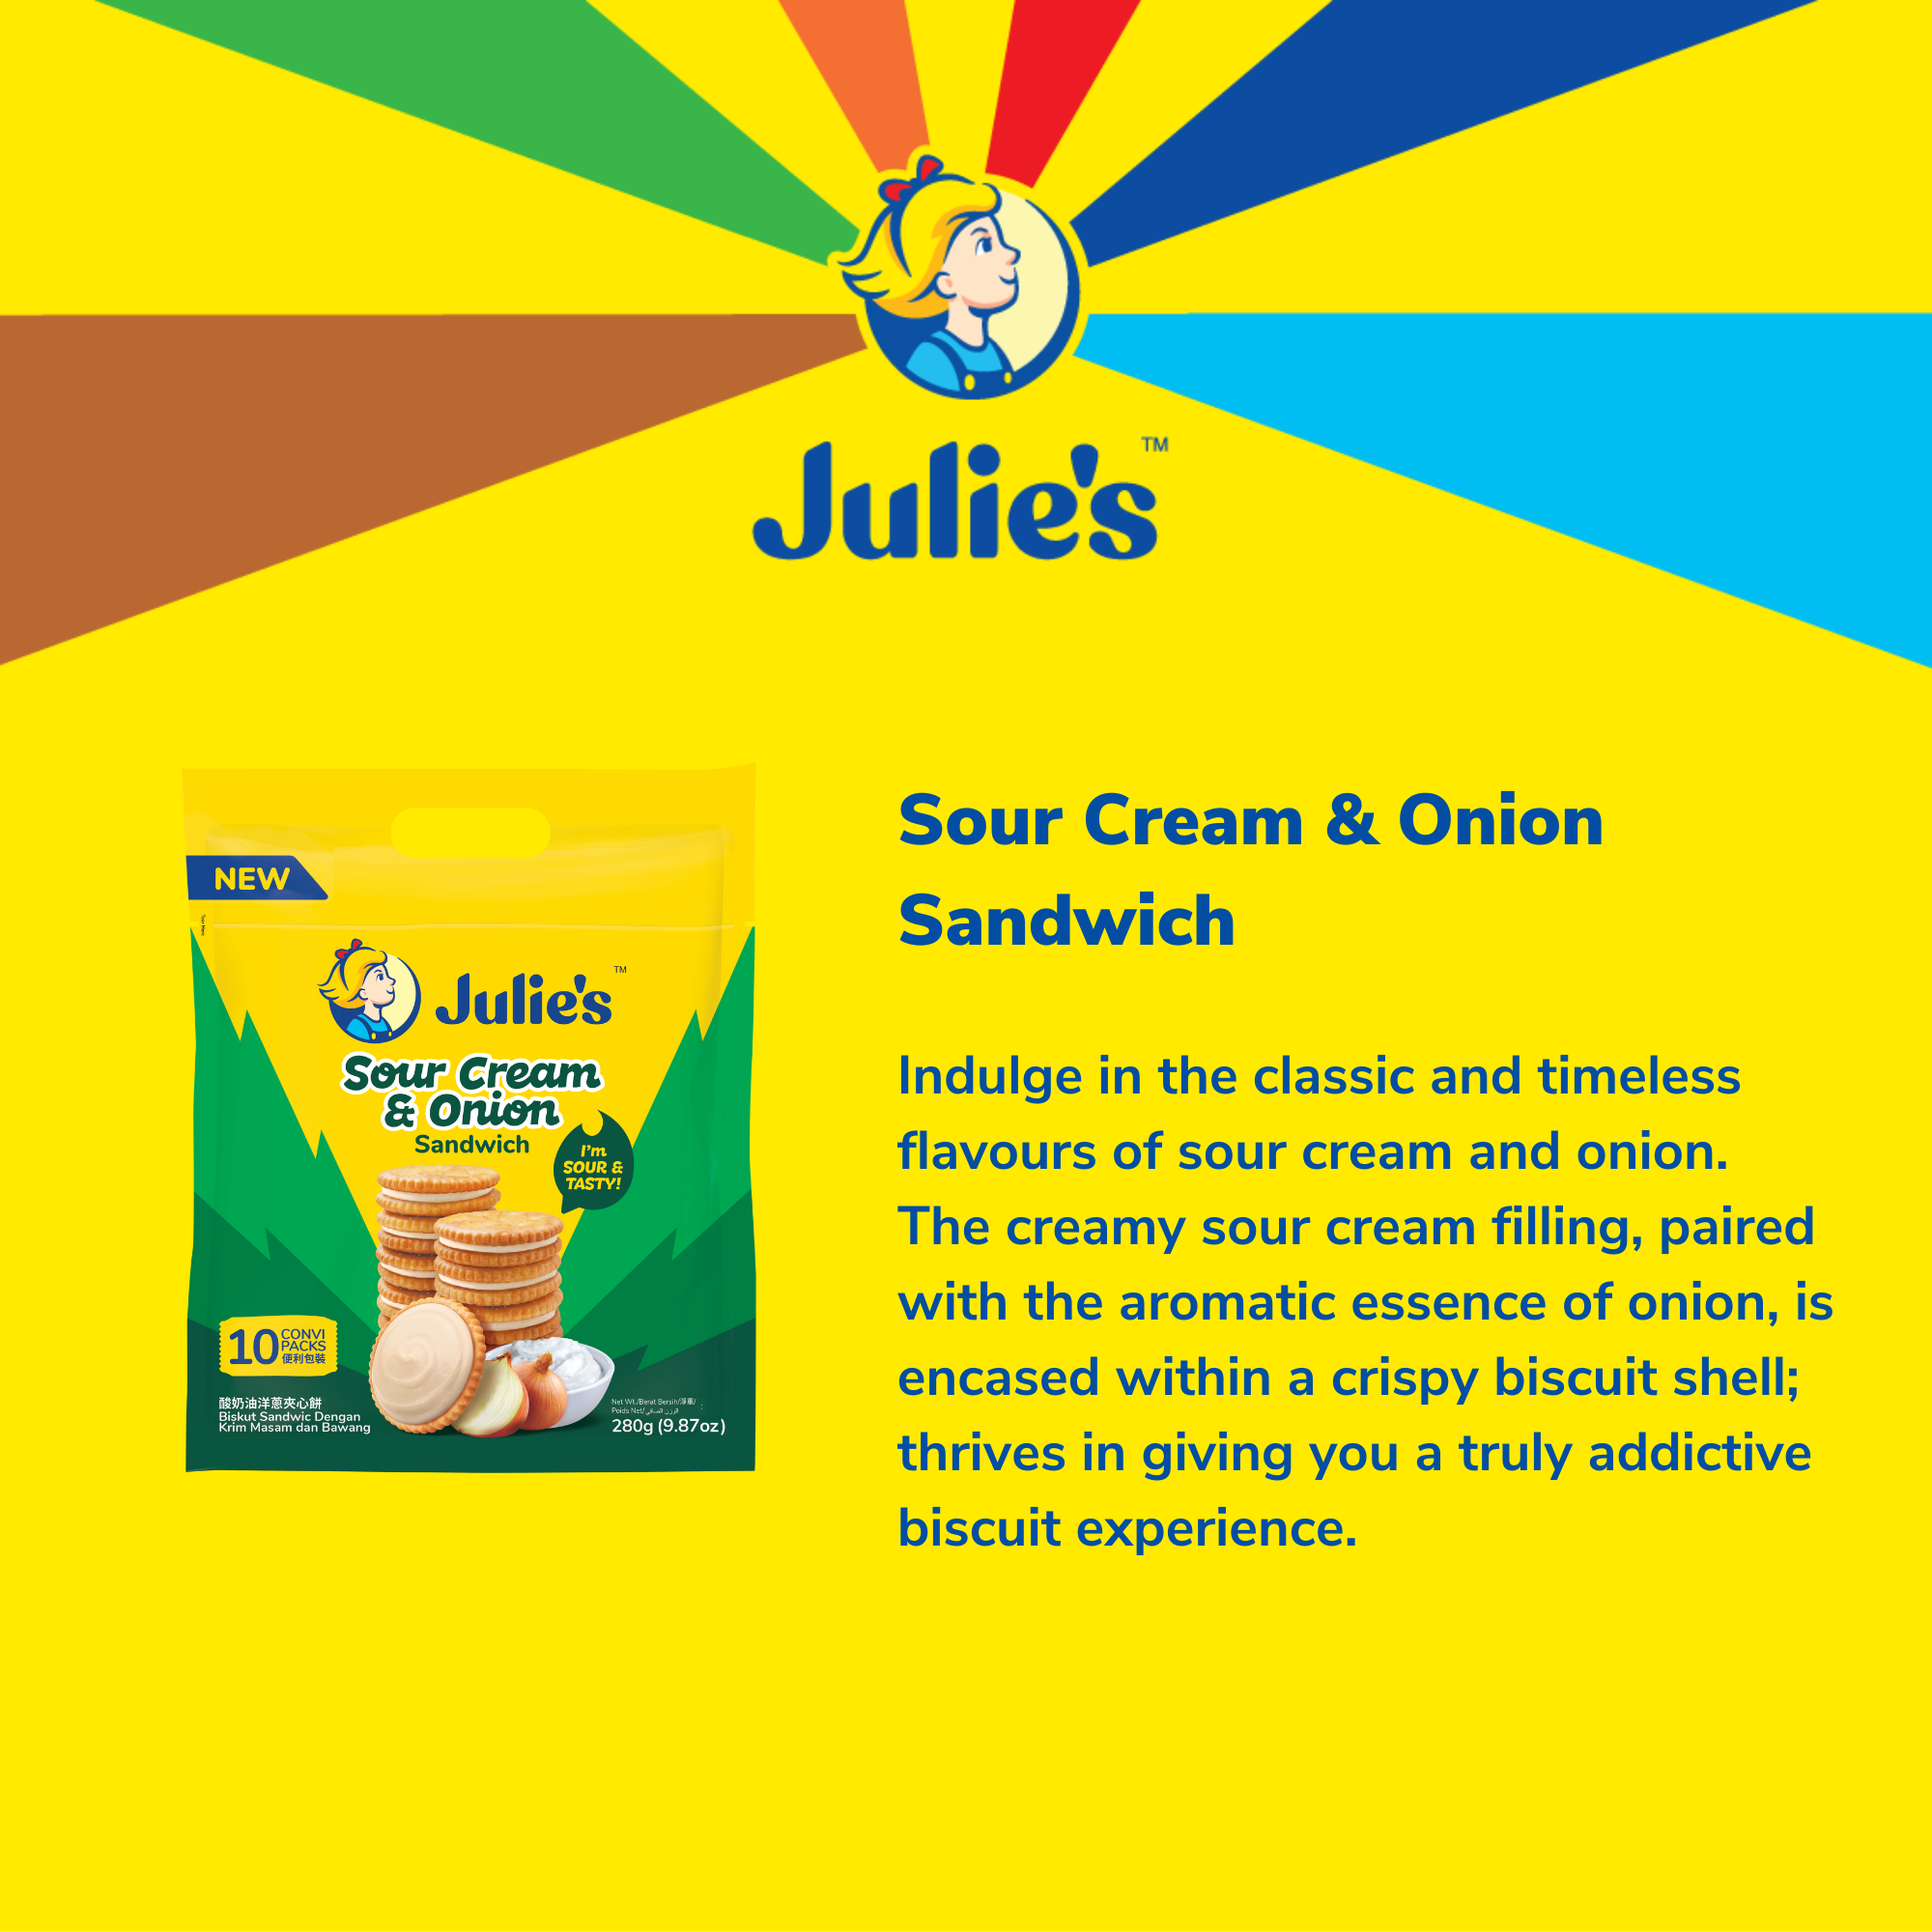 Julie's Sour Cream & Onion Sandwich 280g x 3 packs